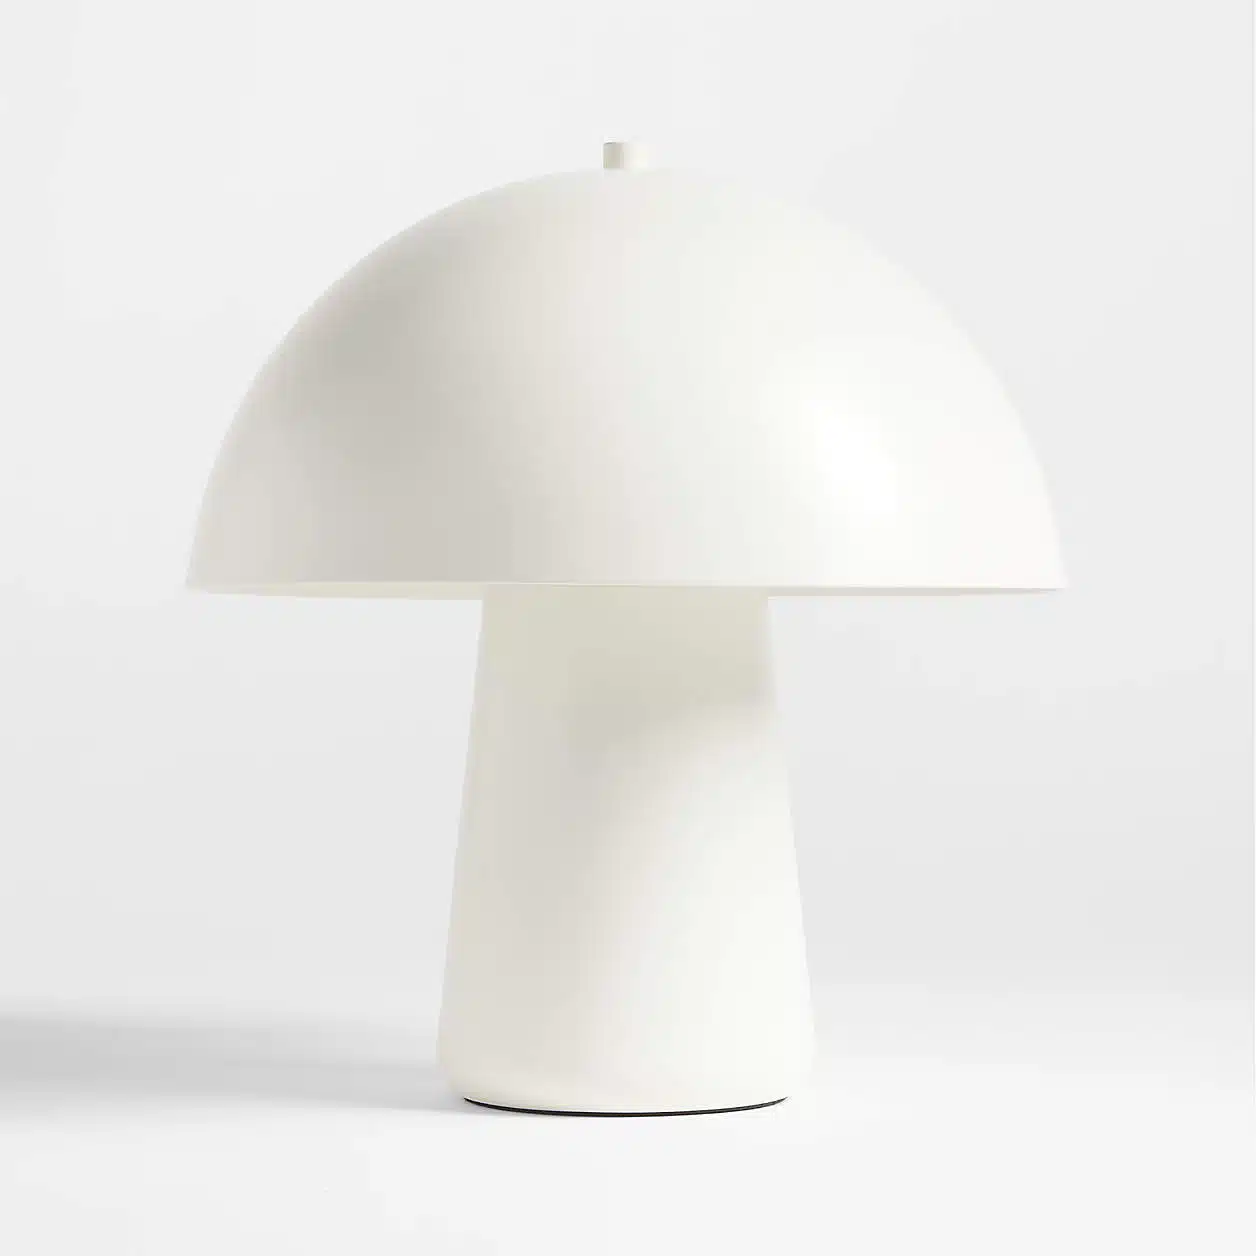 Mushroom Table Lamp 27x31 cm, White